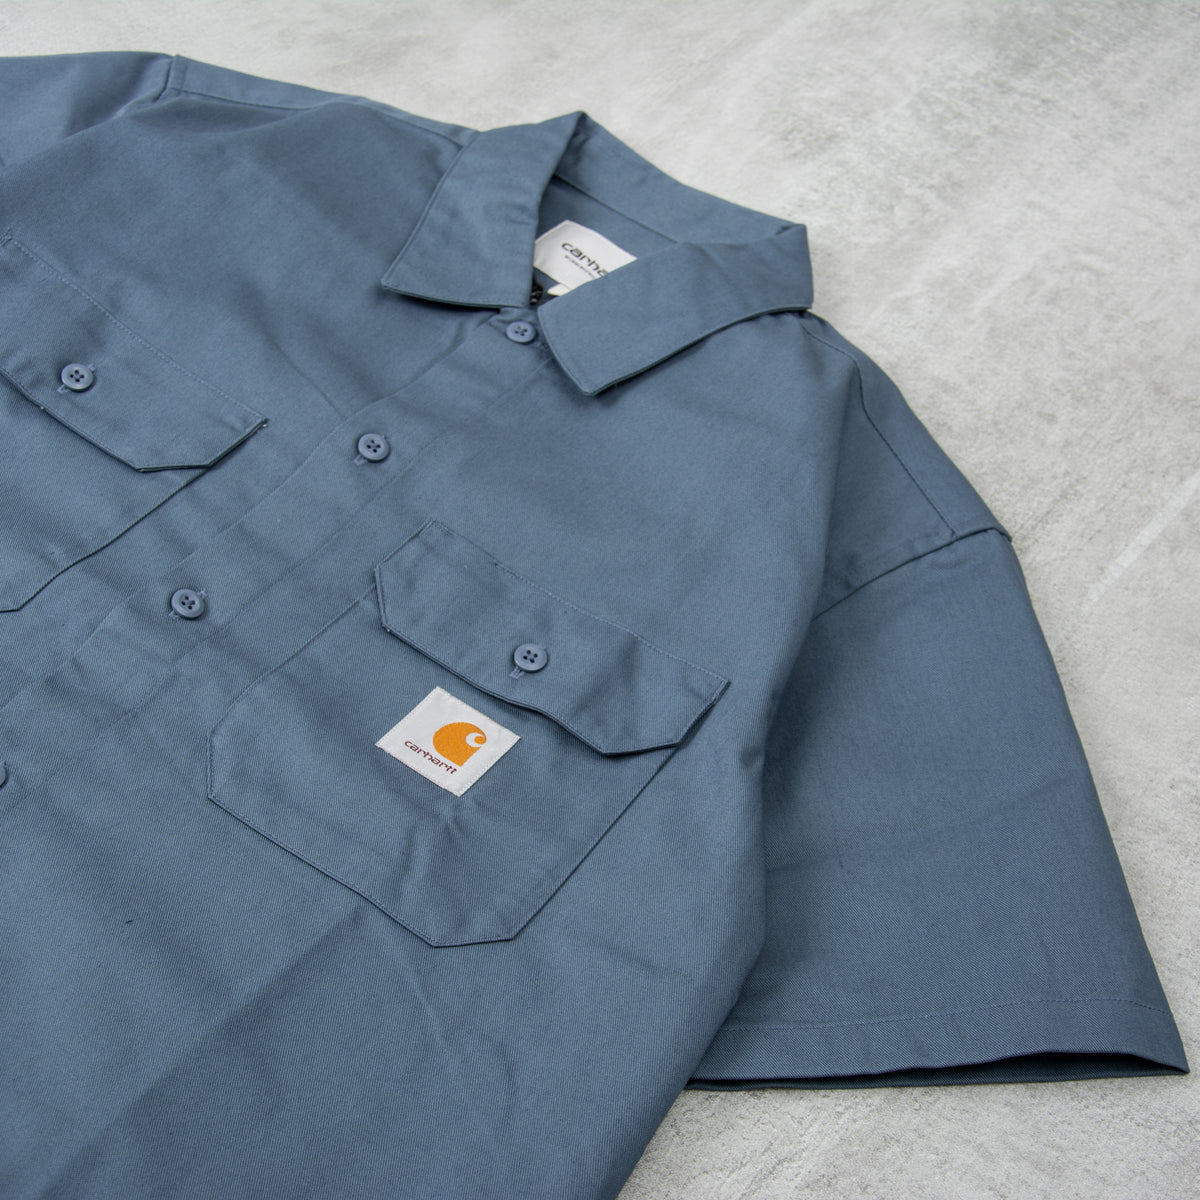 Buy the Carhartt Master S/S Shirt - Storm Blue @Union Clothing | Union ...